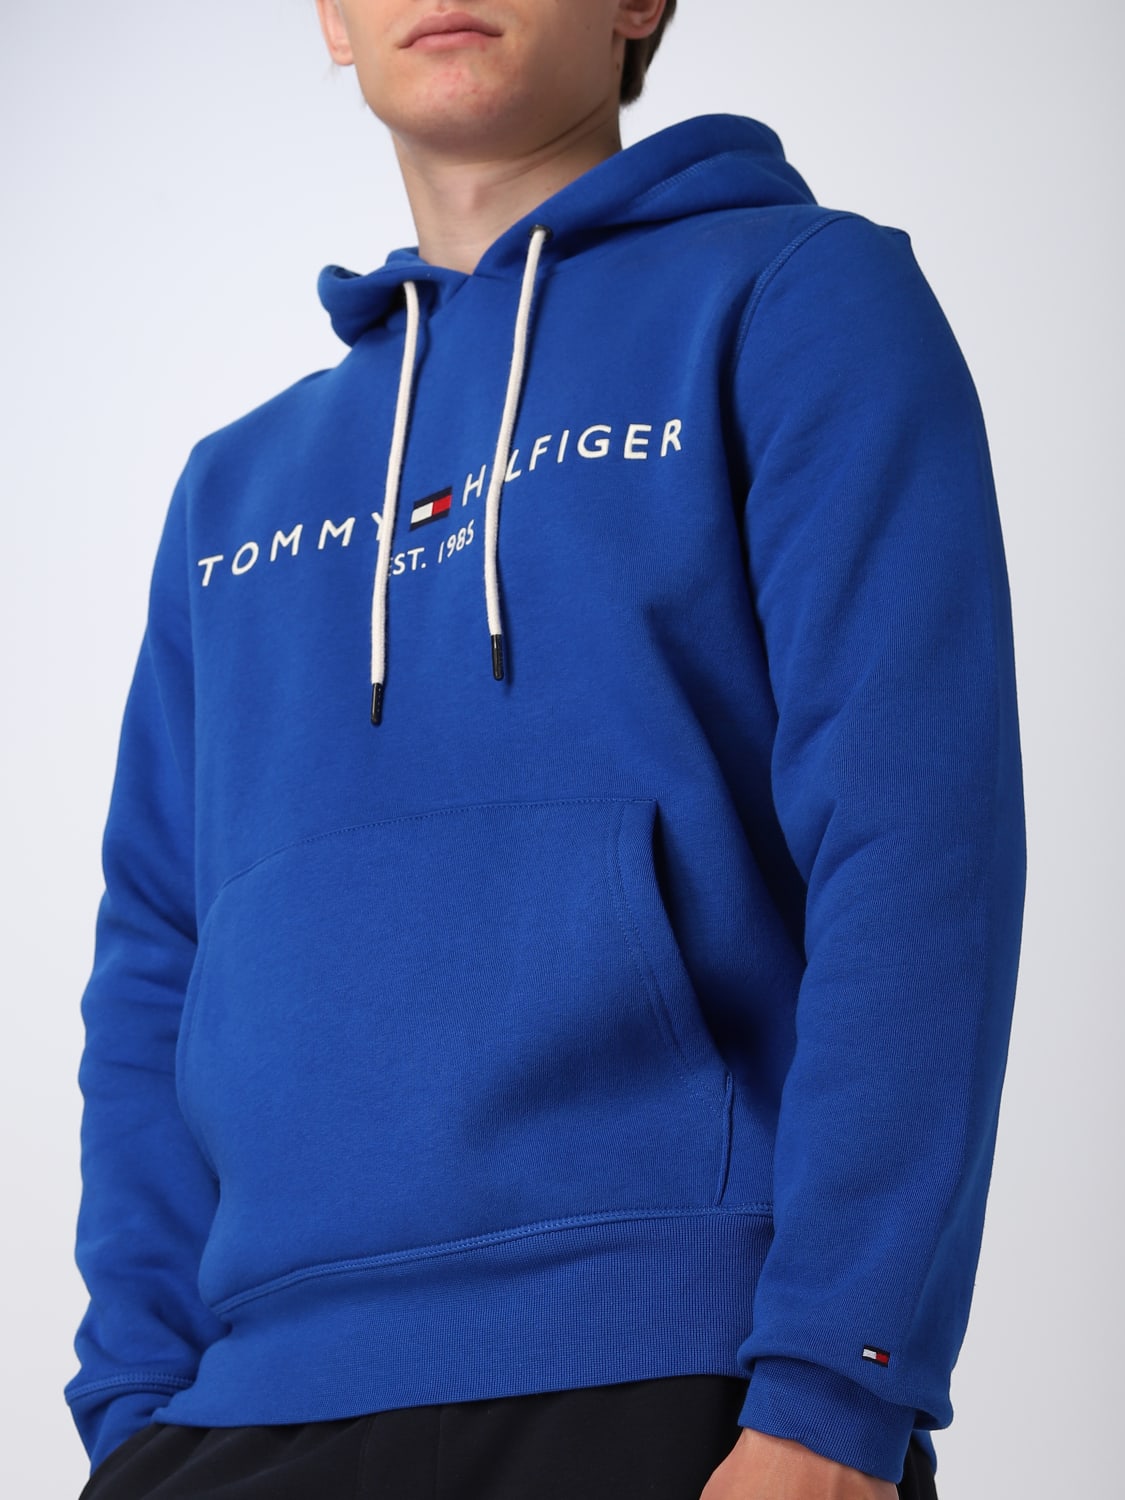 TOMMY HILFIGER: Sweatshirt homme - Bleu Royal  Sweatshirt Tommy Hilfiger  MW0MW11599 en ligne sur